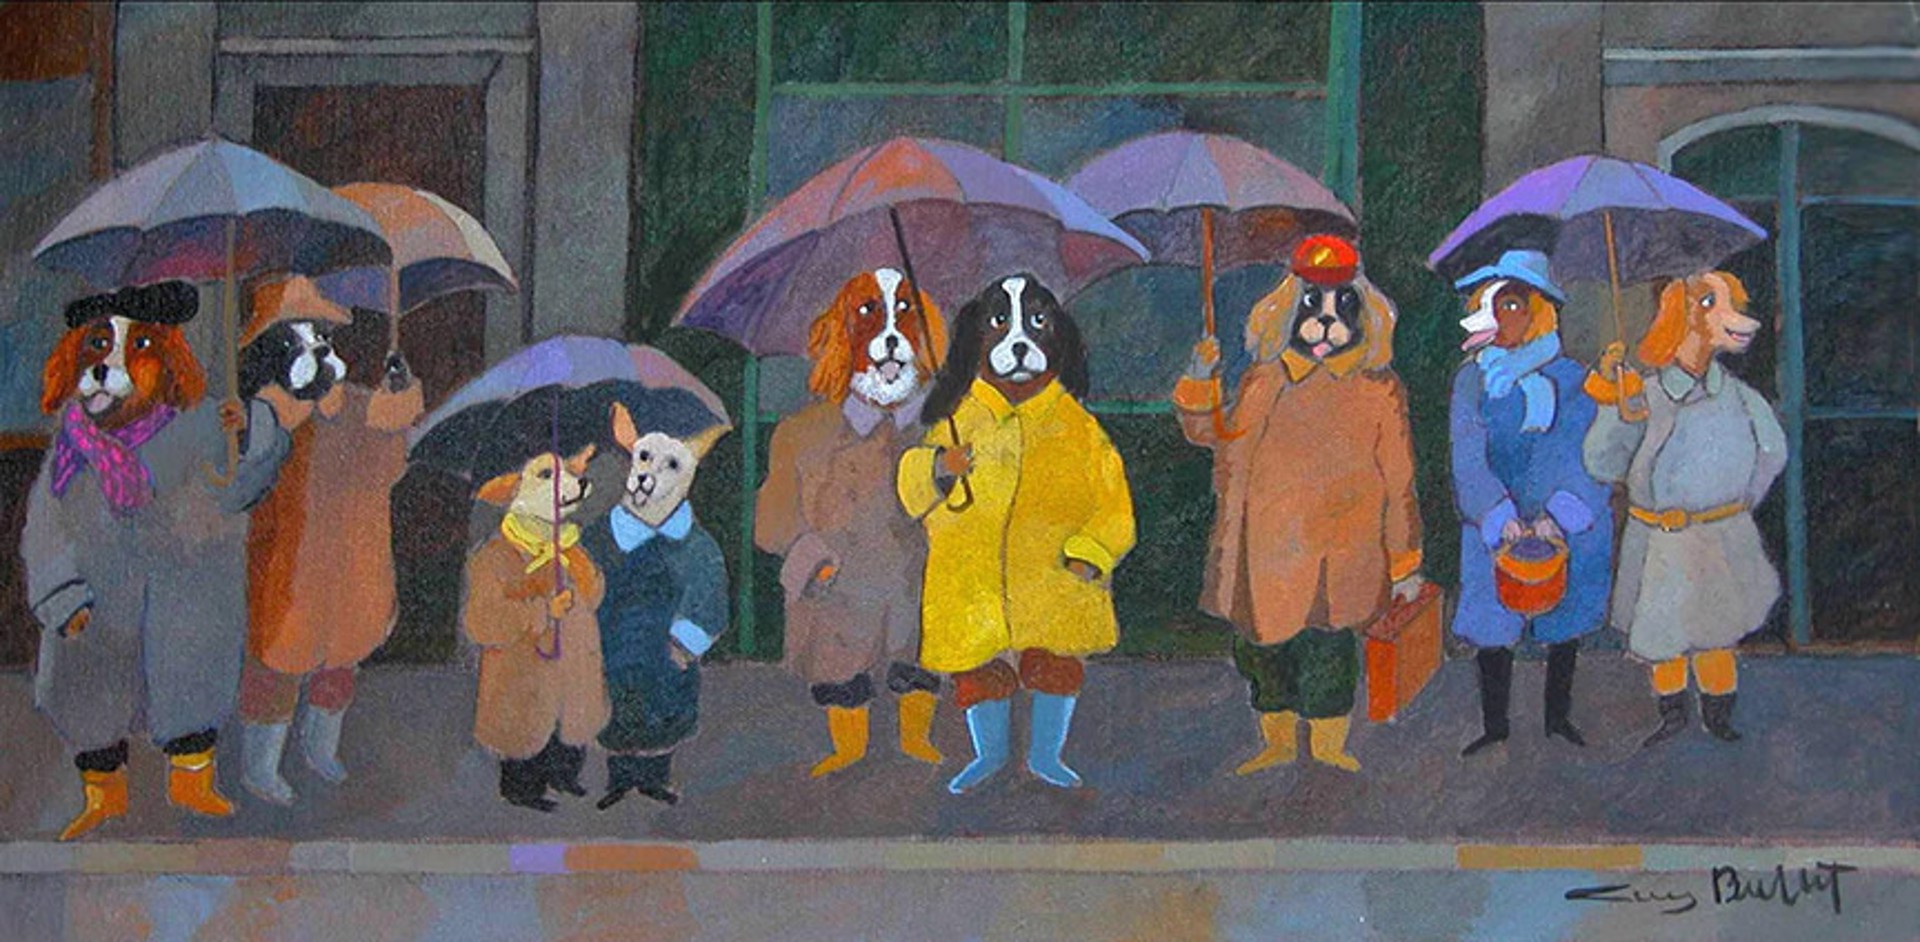 Waiting In The Rain by Guy Buffet